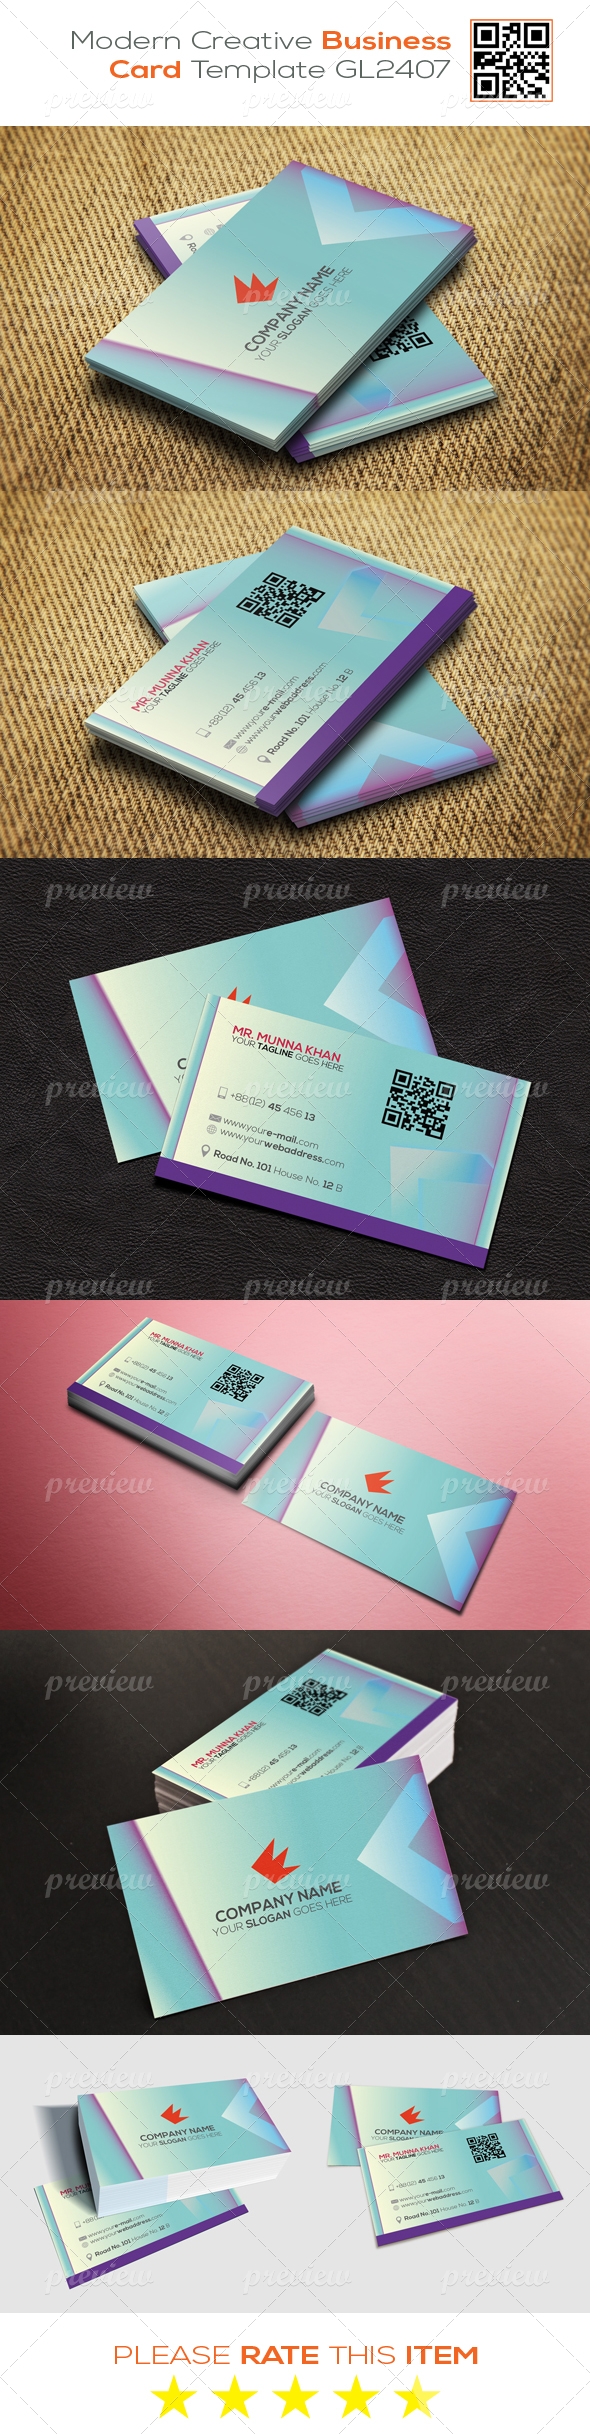 Modern Creative Business Card Template GL2407